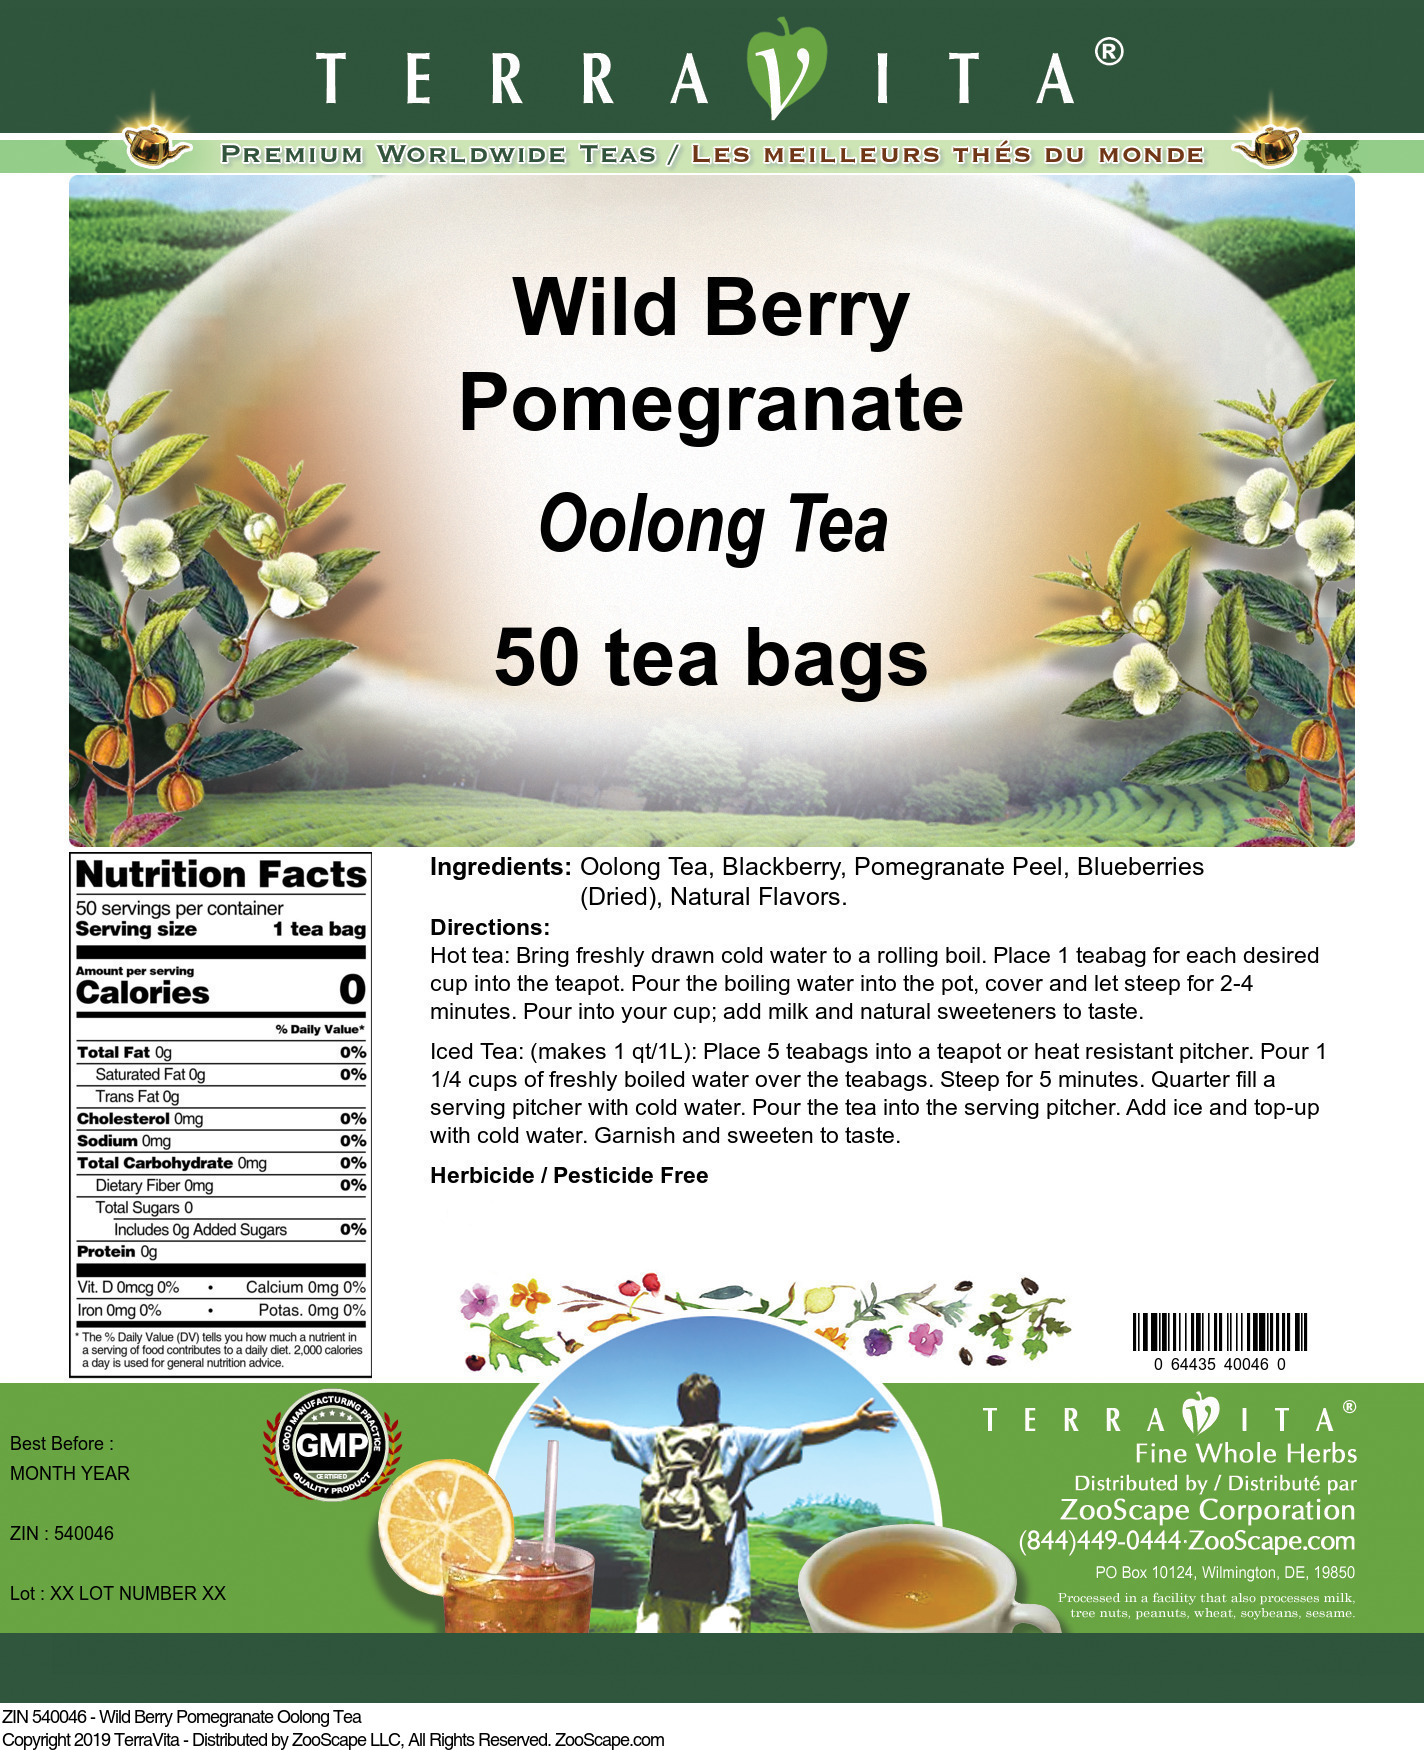 Wild Berry Pomegranate Oolong Tea - Label